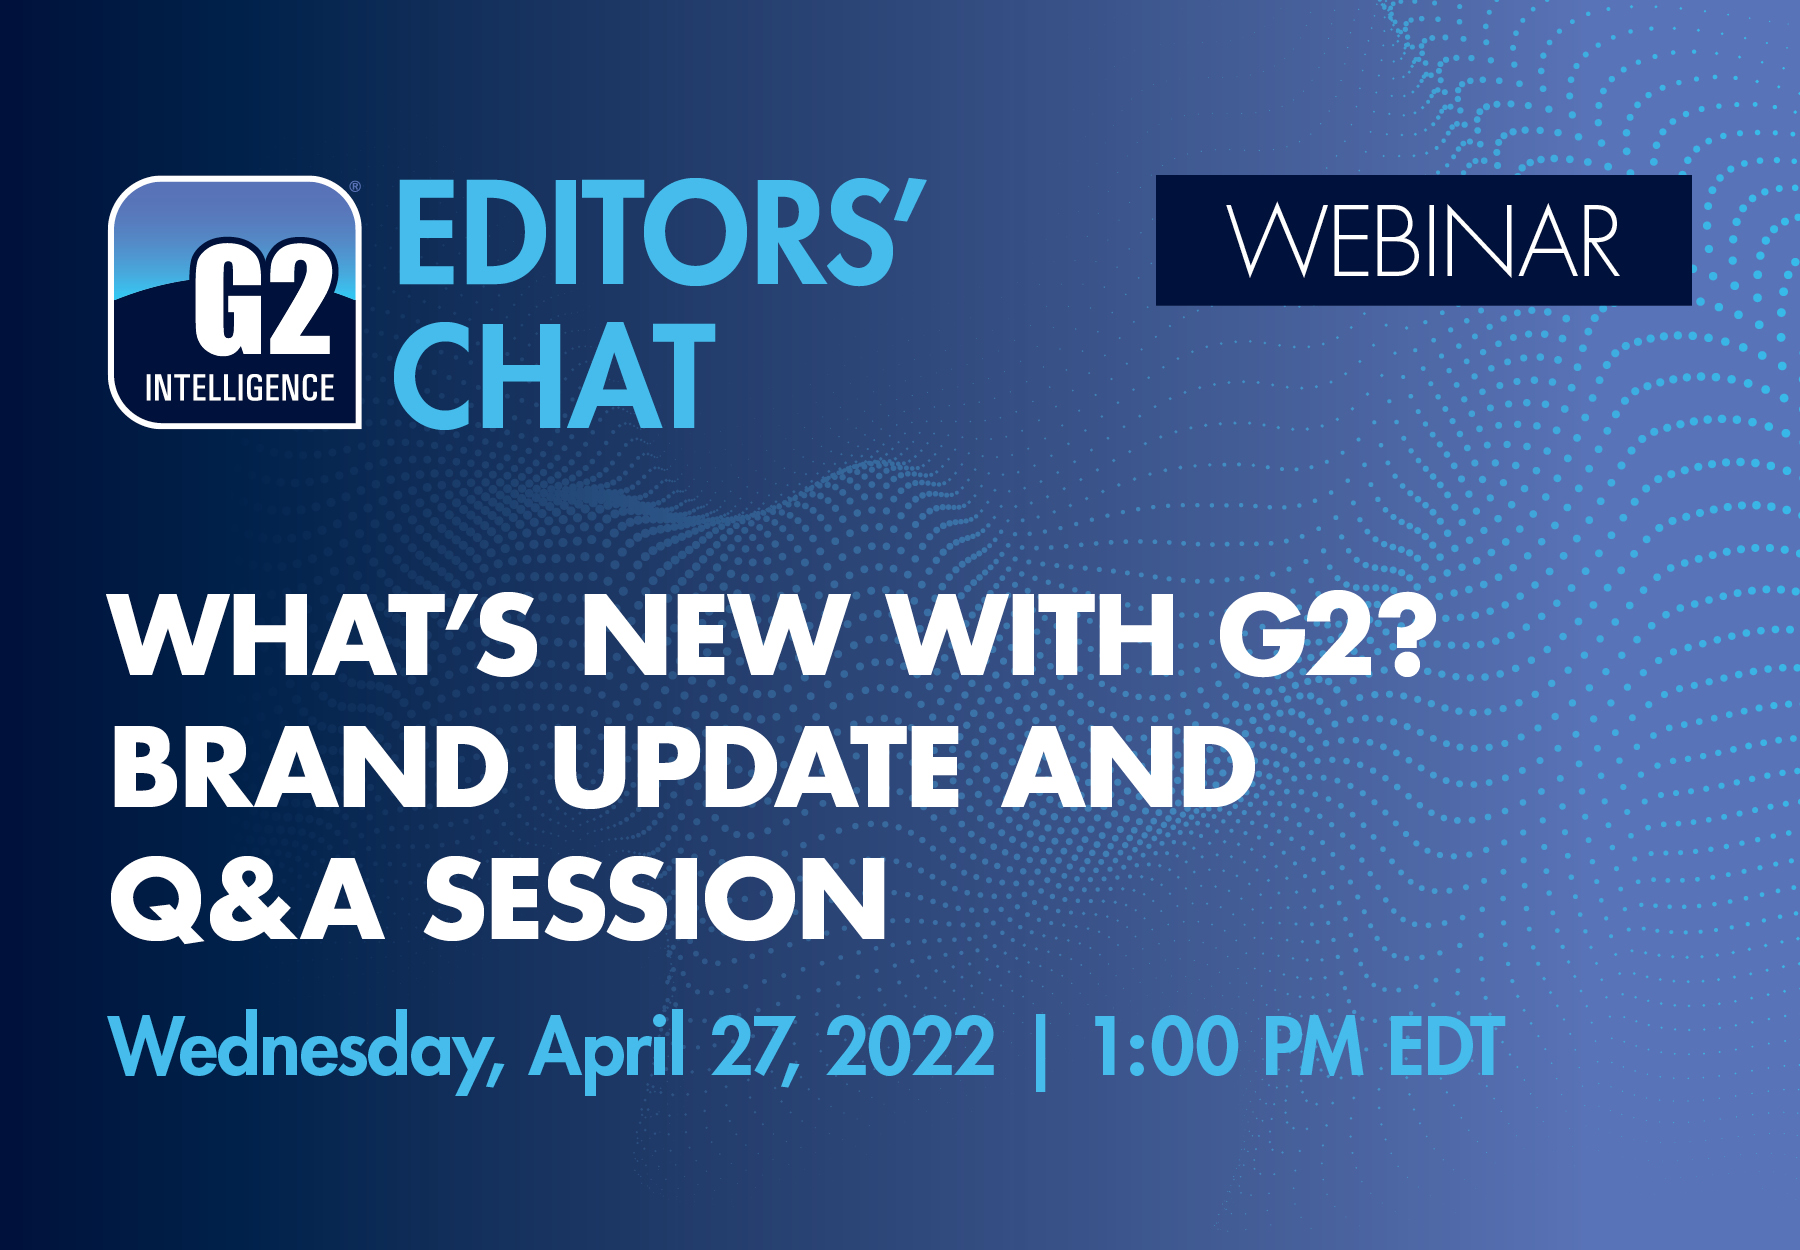 G2 Intelligence Editors' Chat April 27, 2022 Webinar